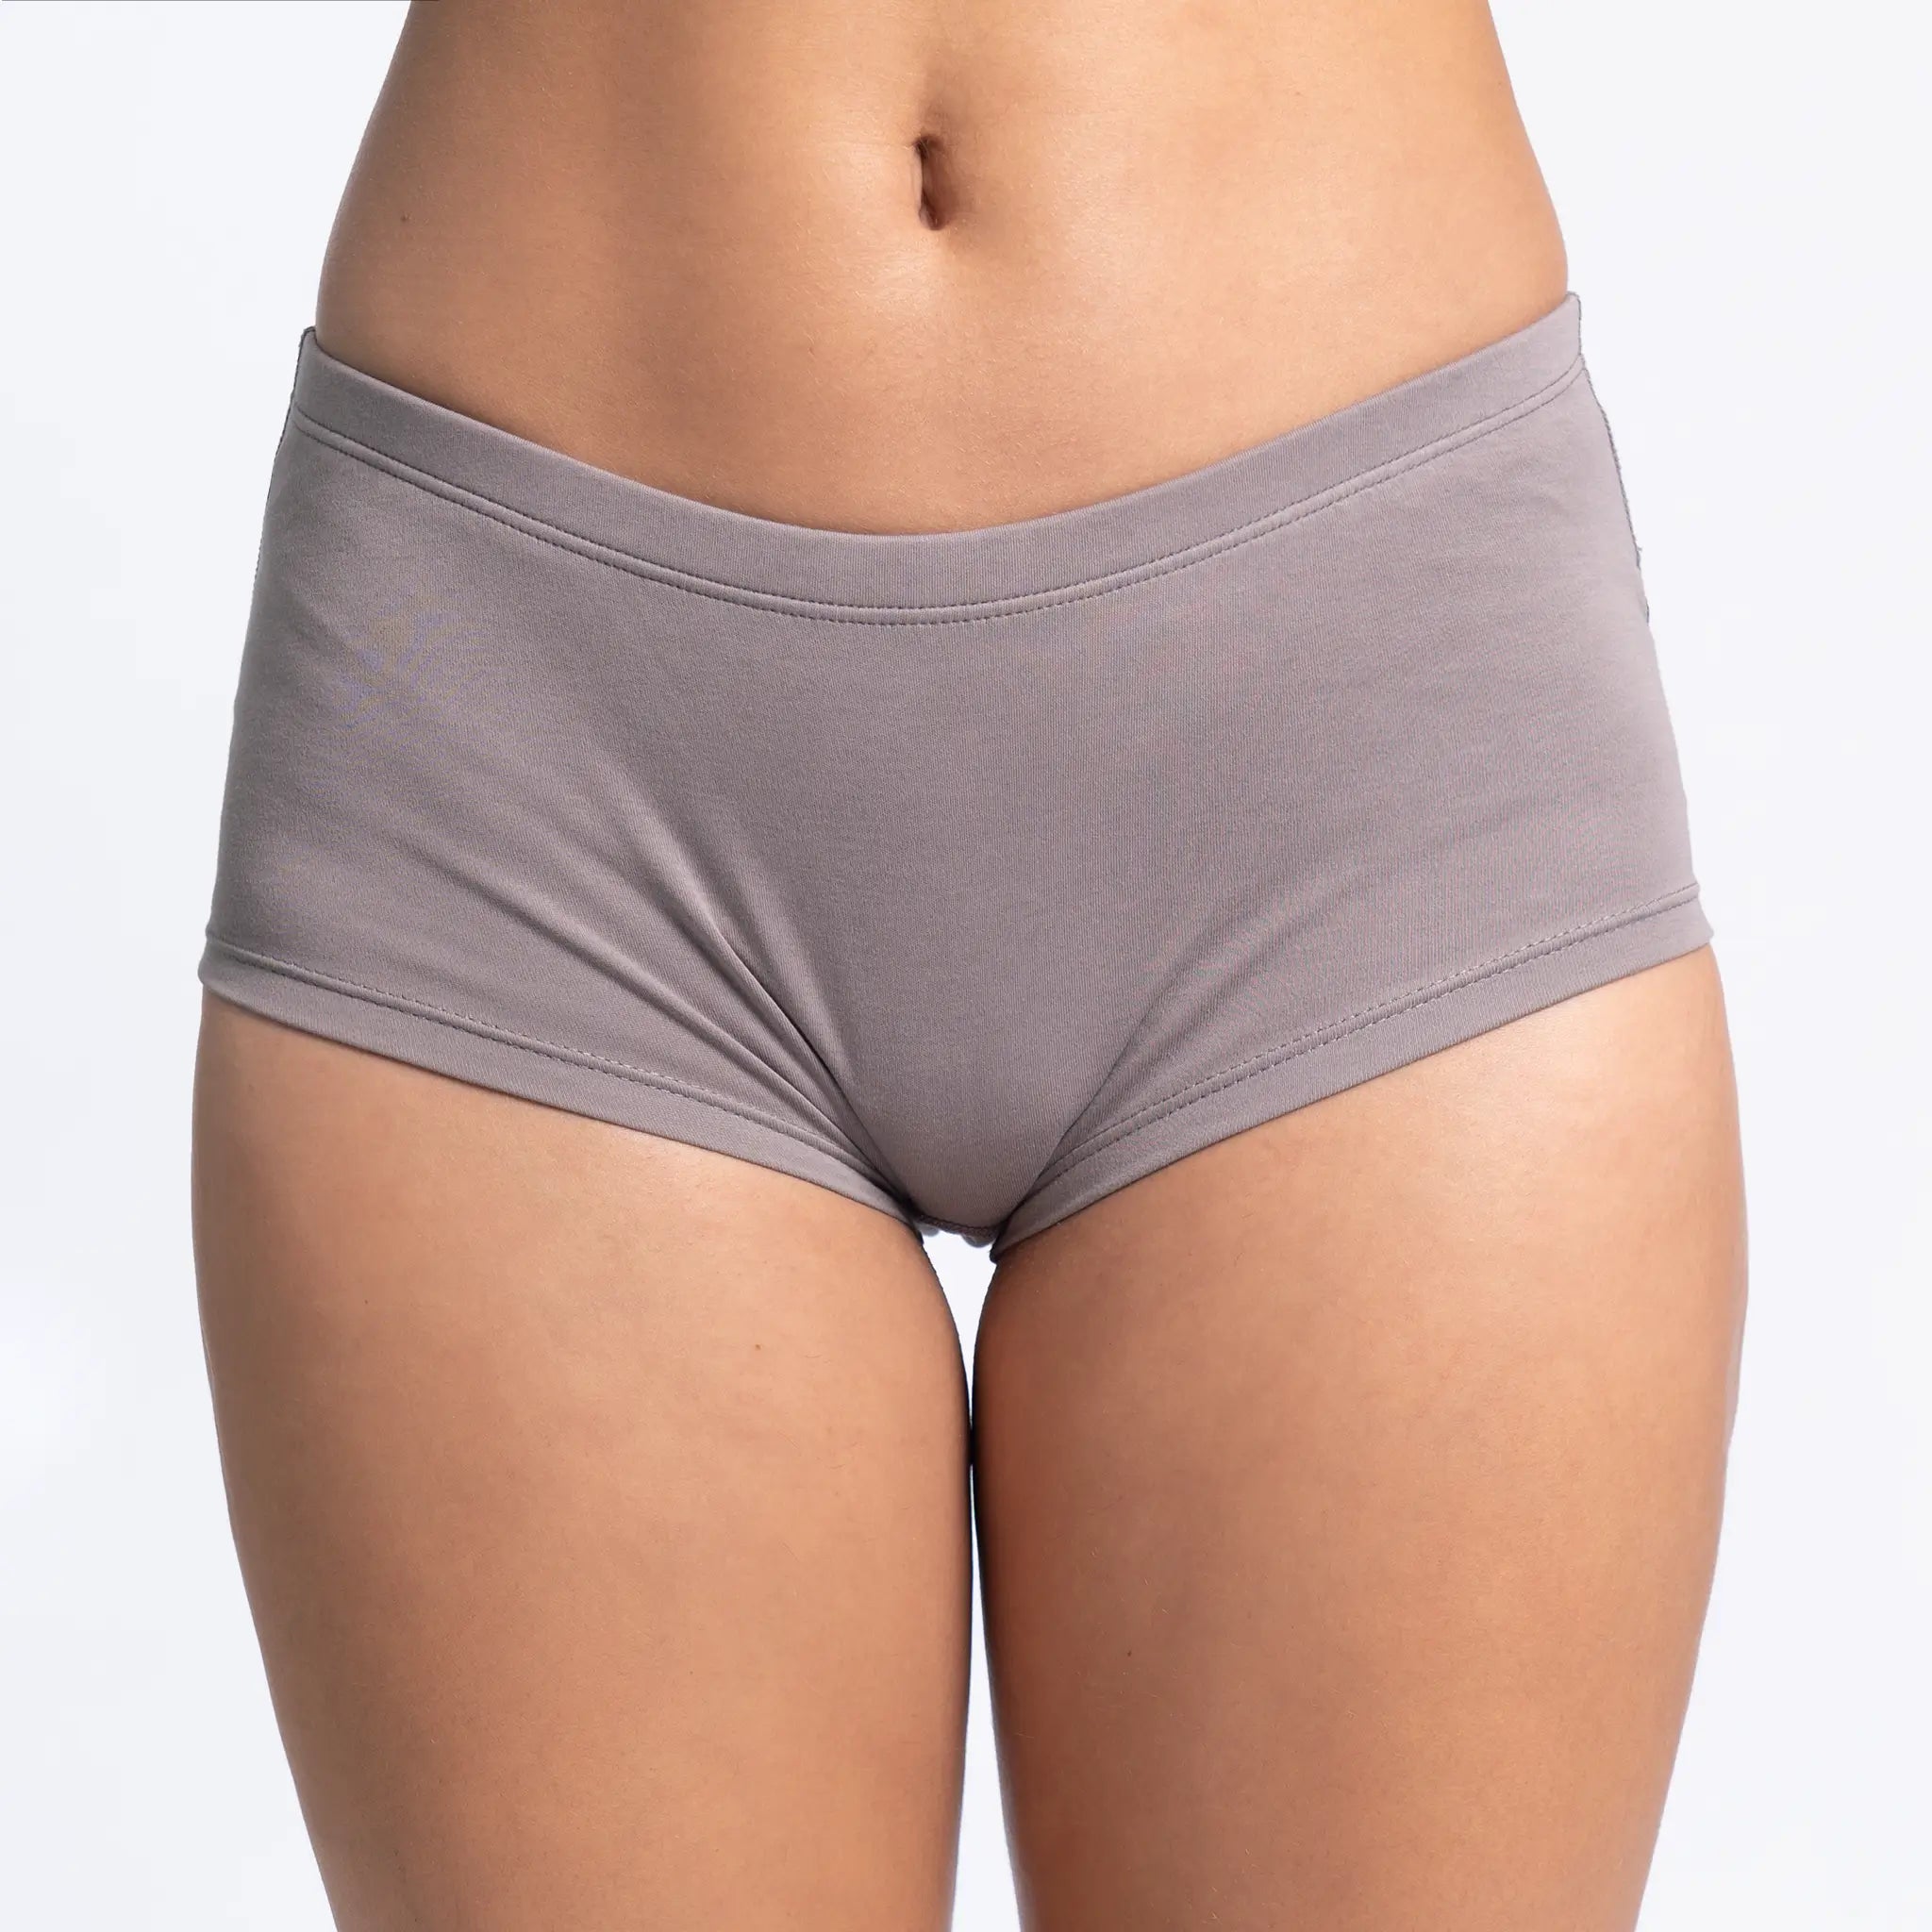 womens biodegradable panties color natural gray